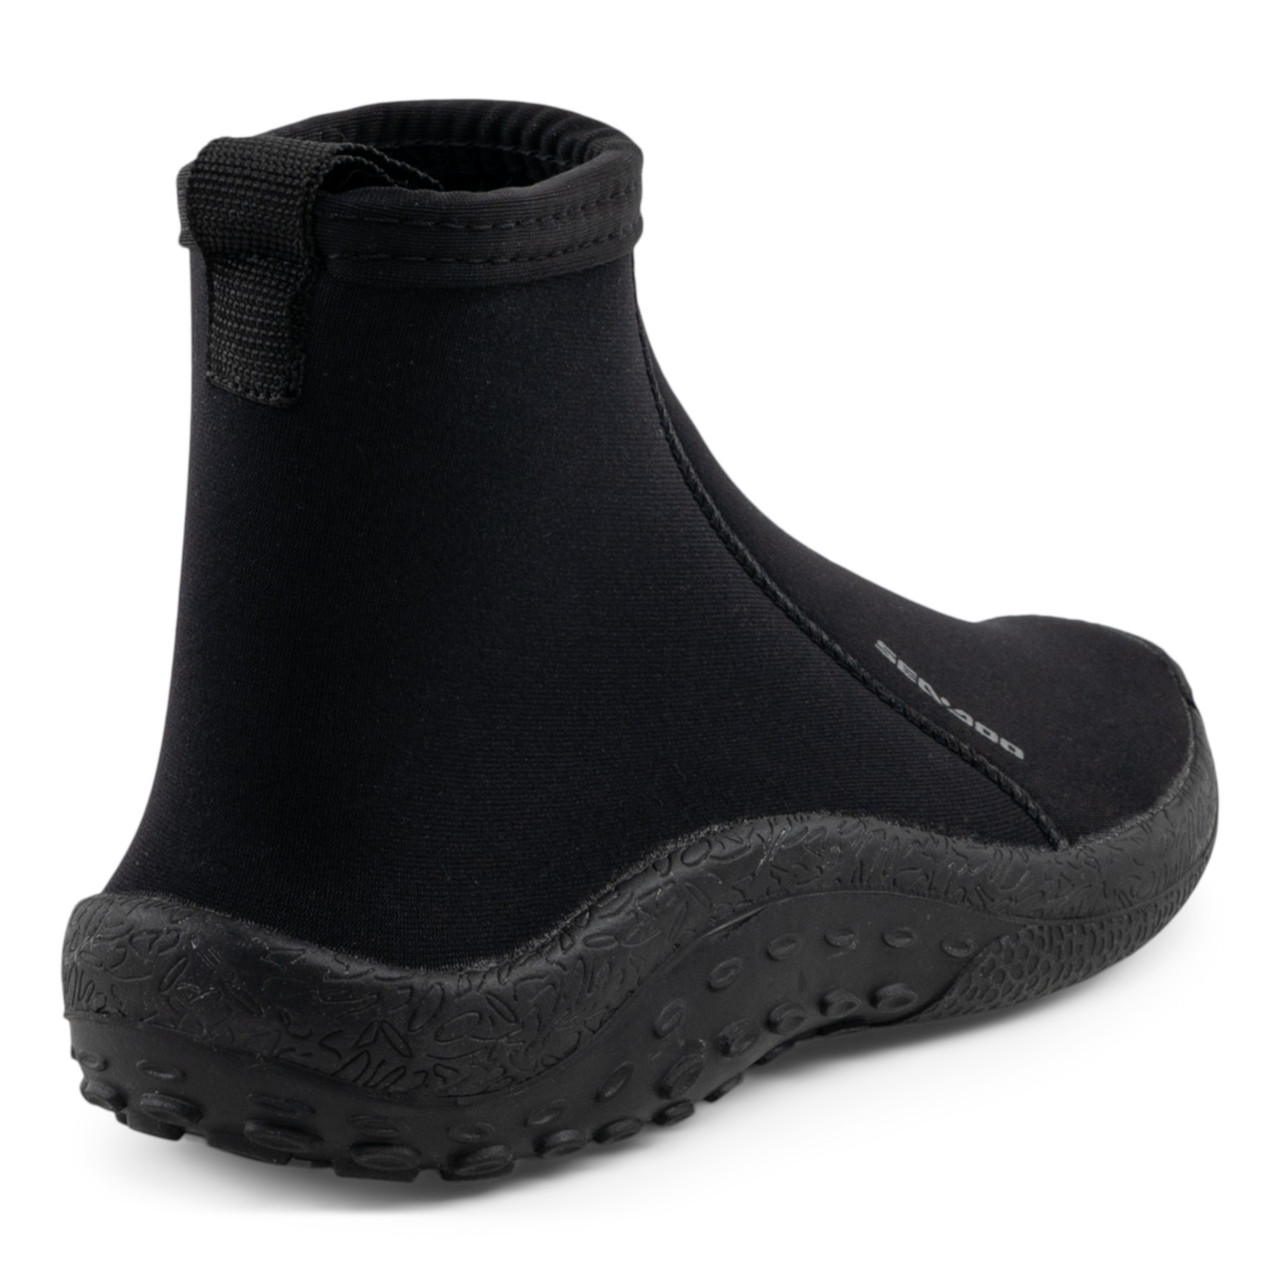 Sea-Doo New OEM, Unisex Ultra-Durable Double-glued Neoprene Shoes, 4442613390